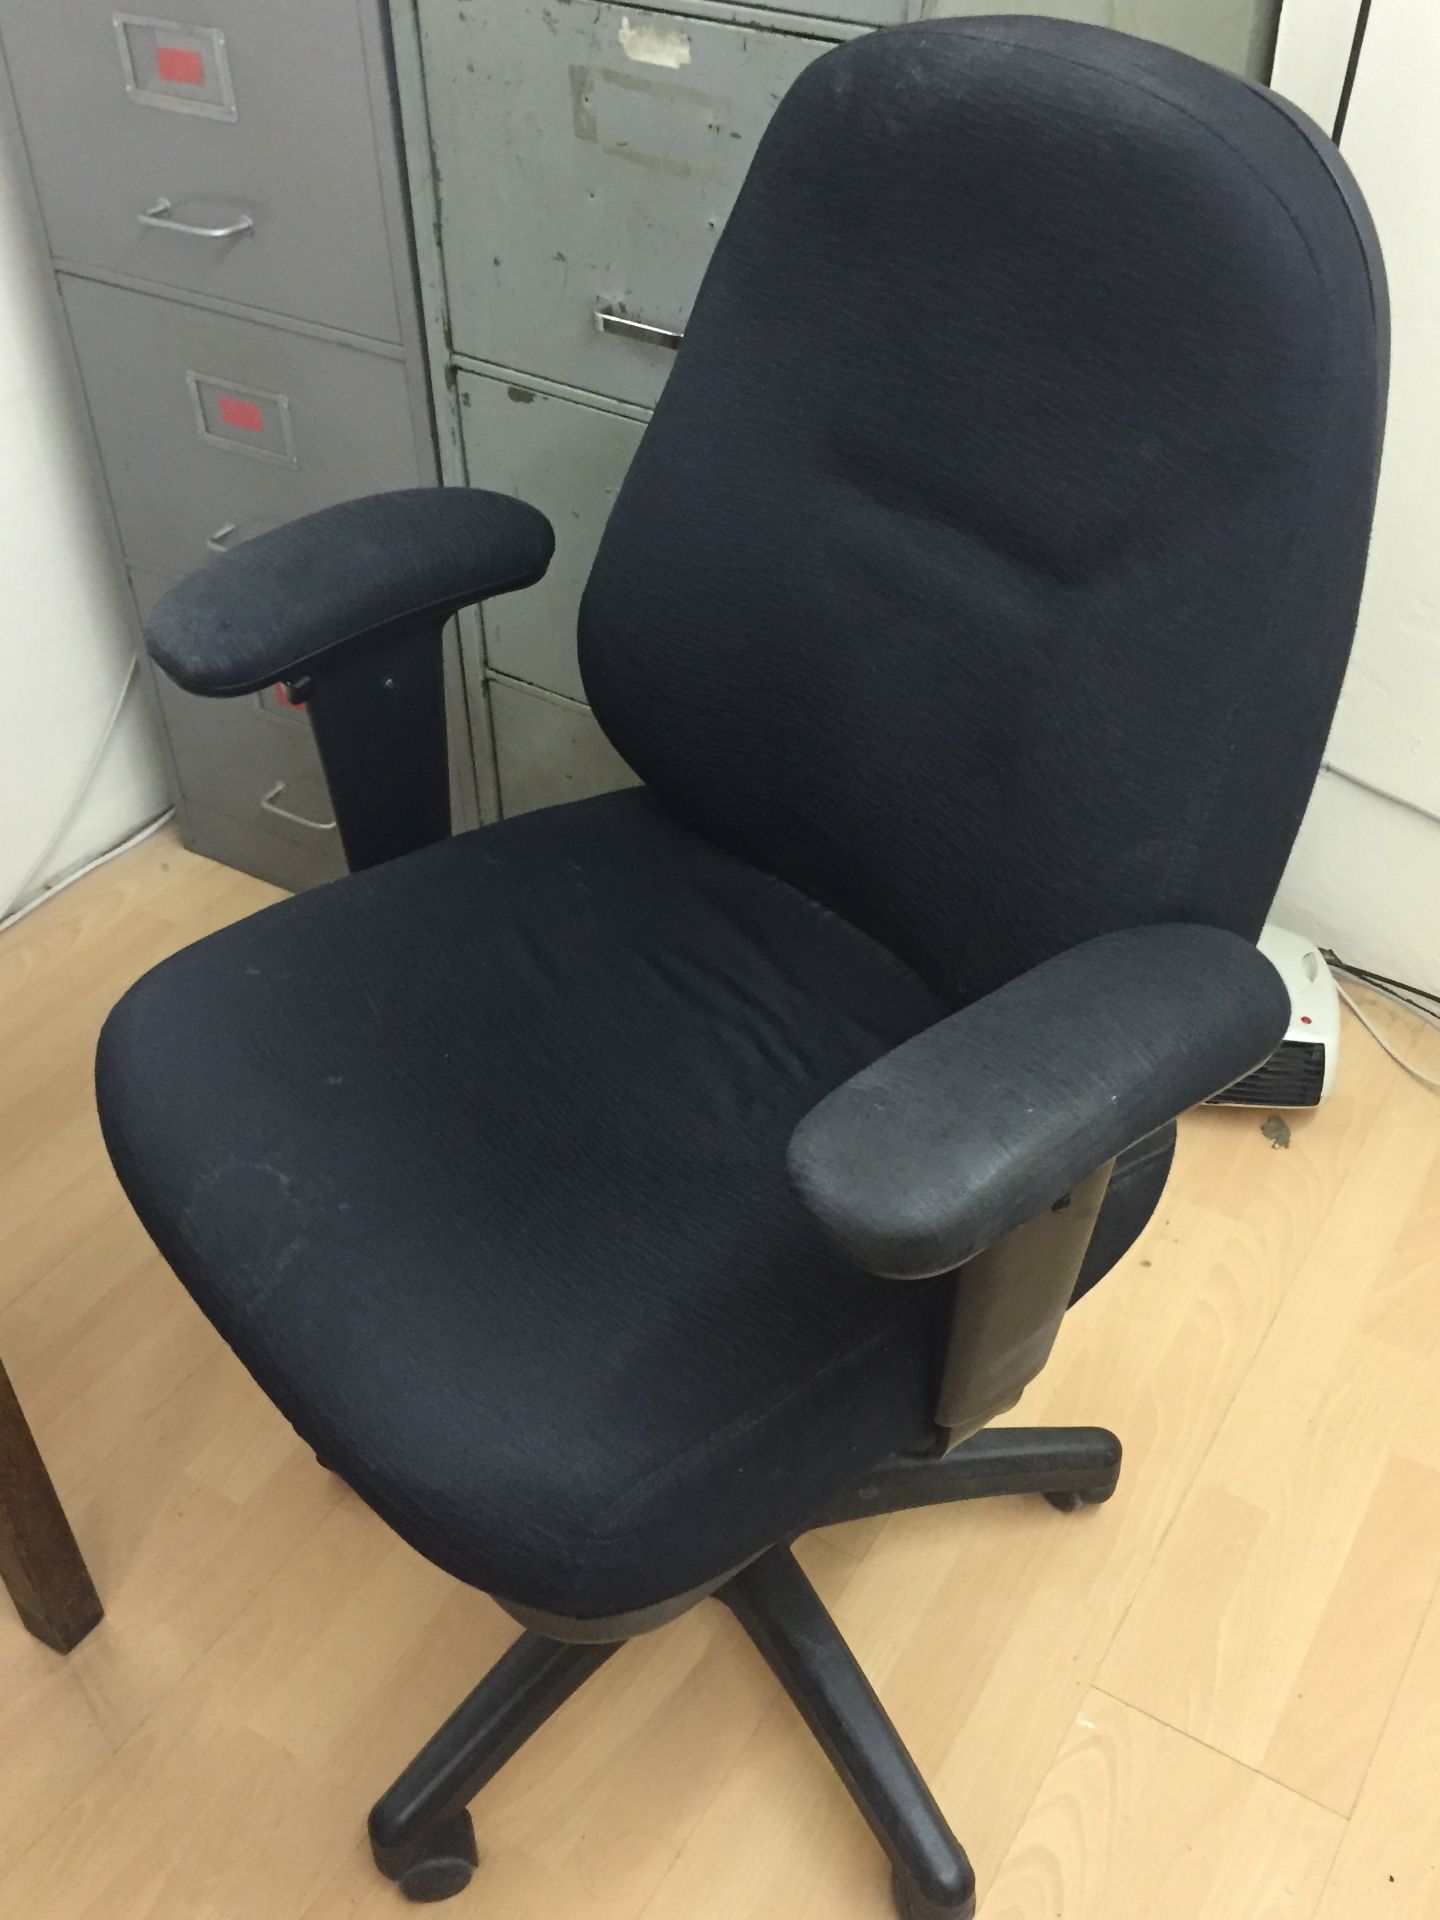 1 x Black Office Chair - CL171 - Location: London, N4